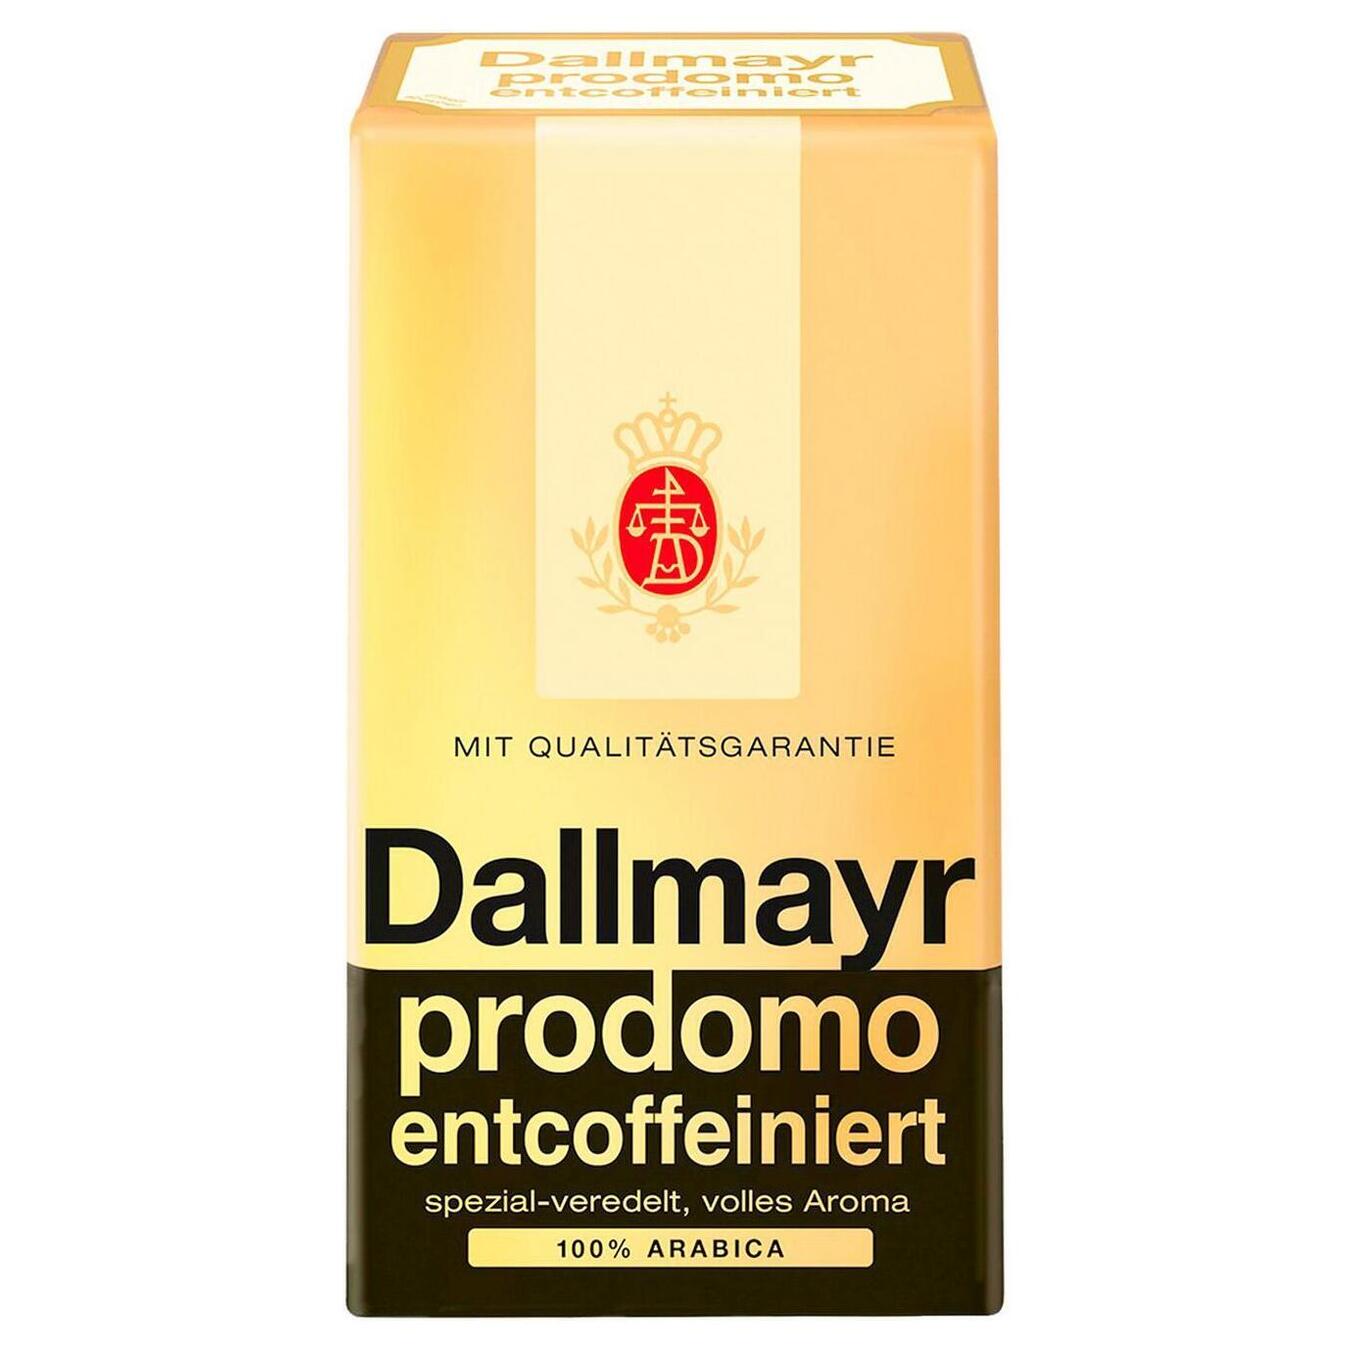 Dallmayr Prodomo caffeine-free ground coffee 500g